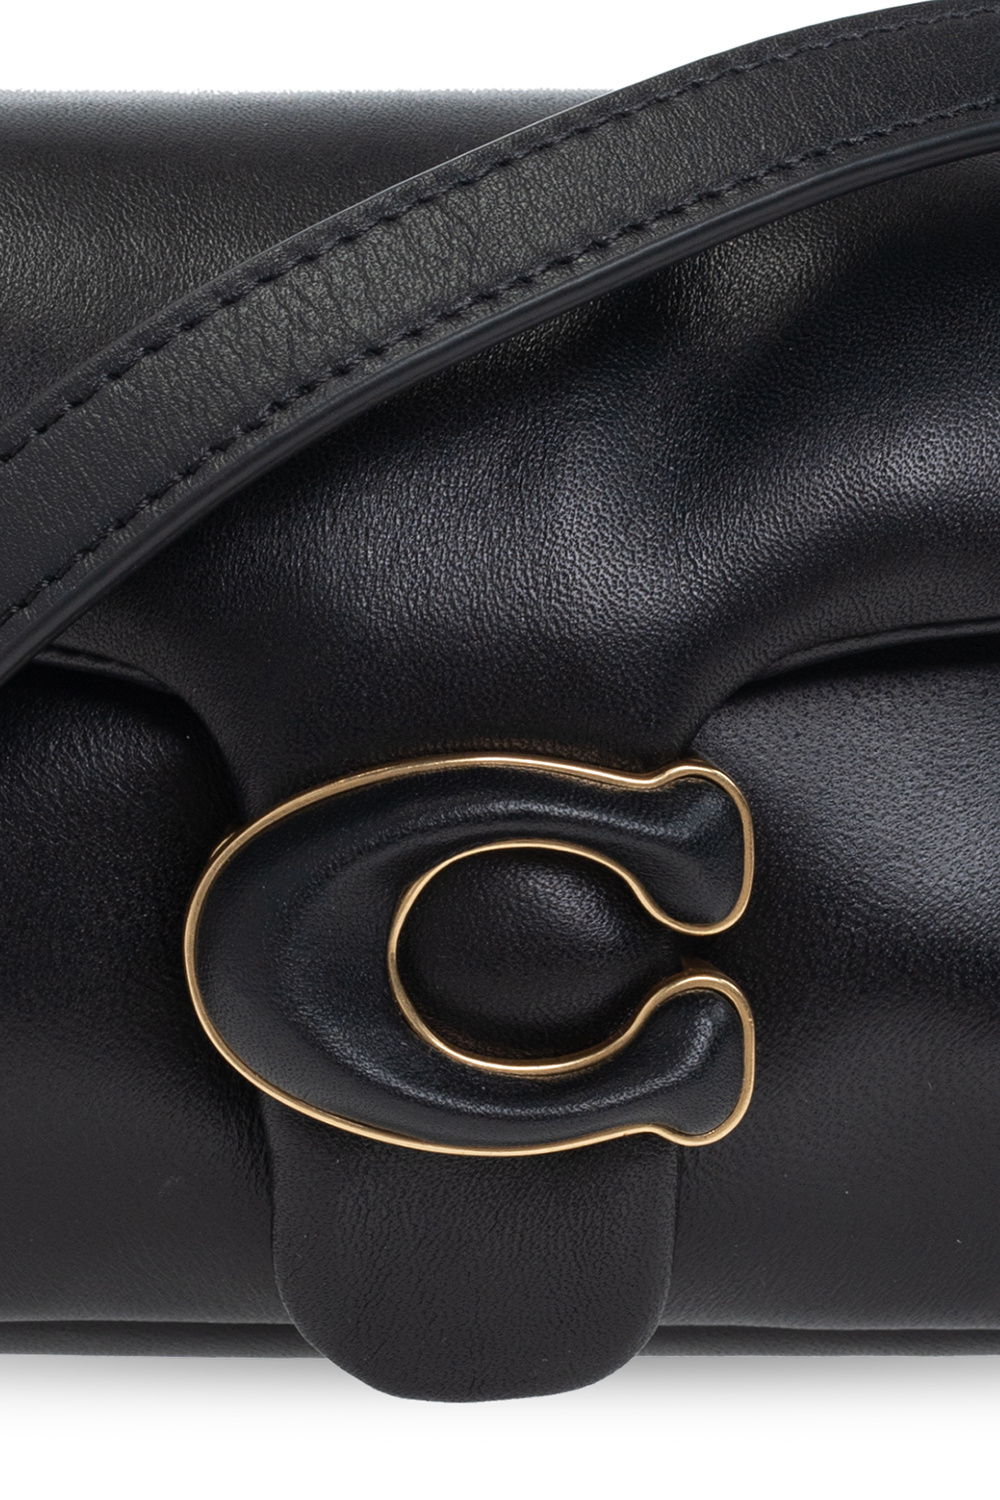 COACH Pillow Tabby 18 black leather cross-body bag